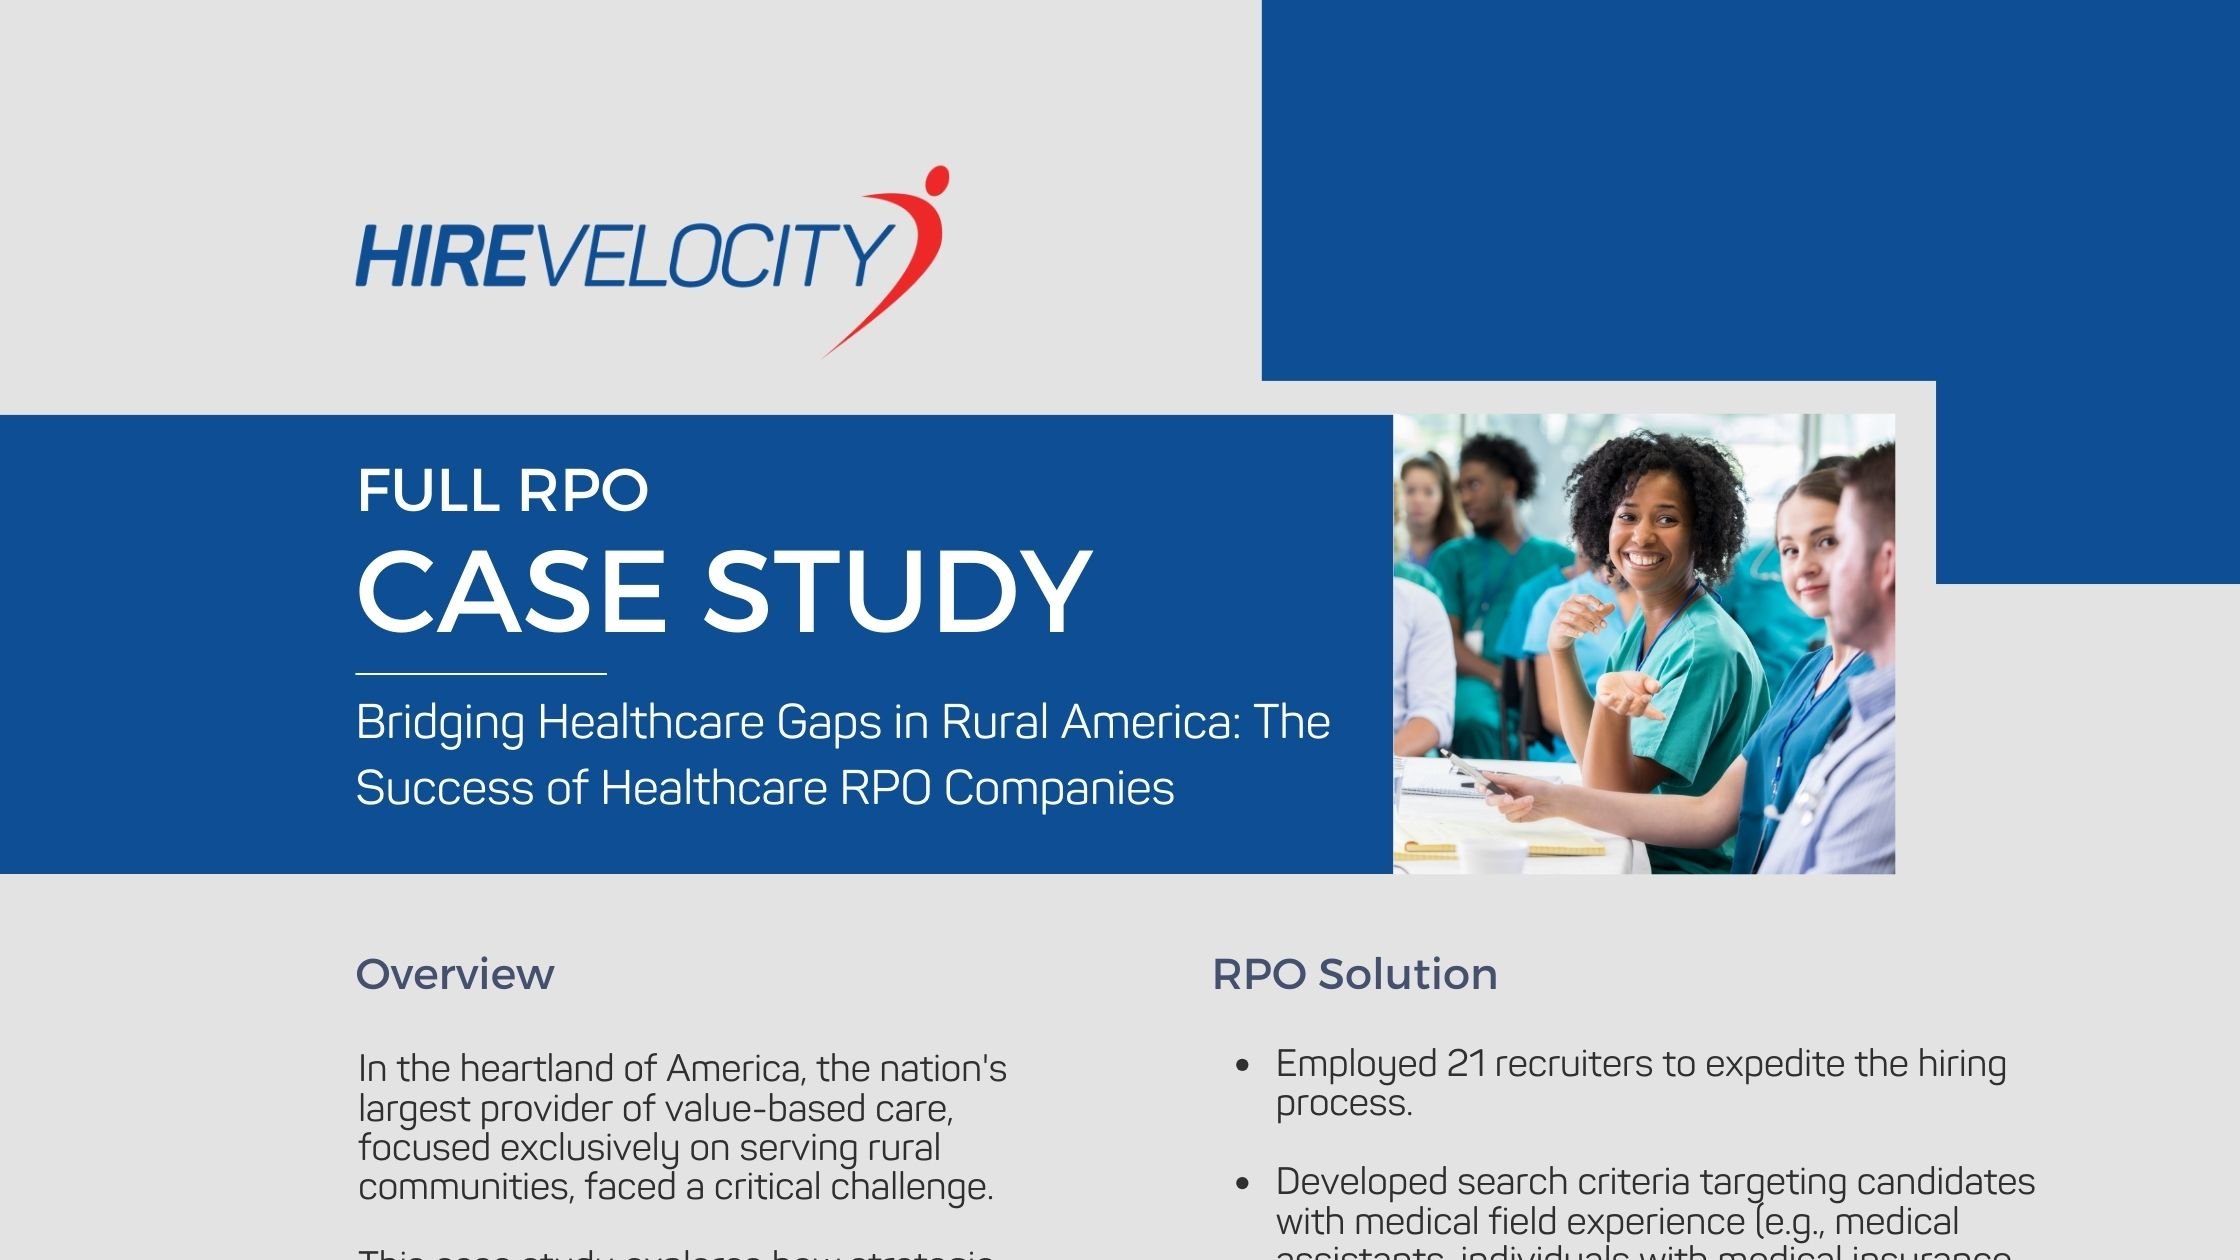 Bridging Healthcare Gaps The Success of Healthcare RPO Companies